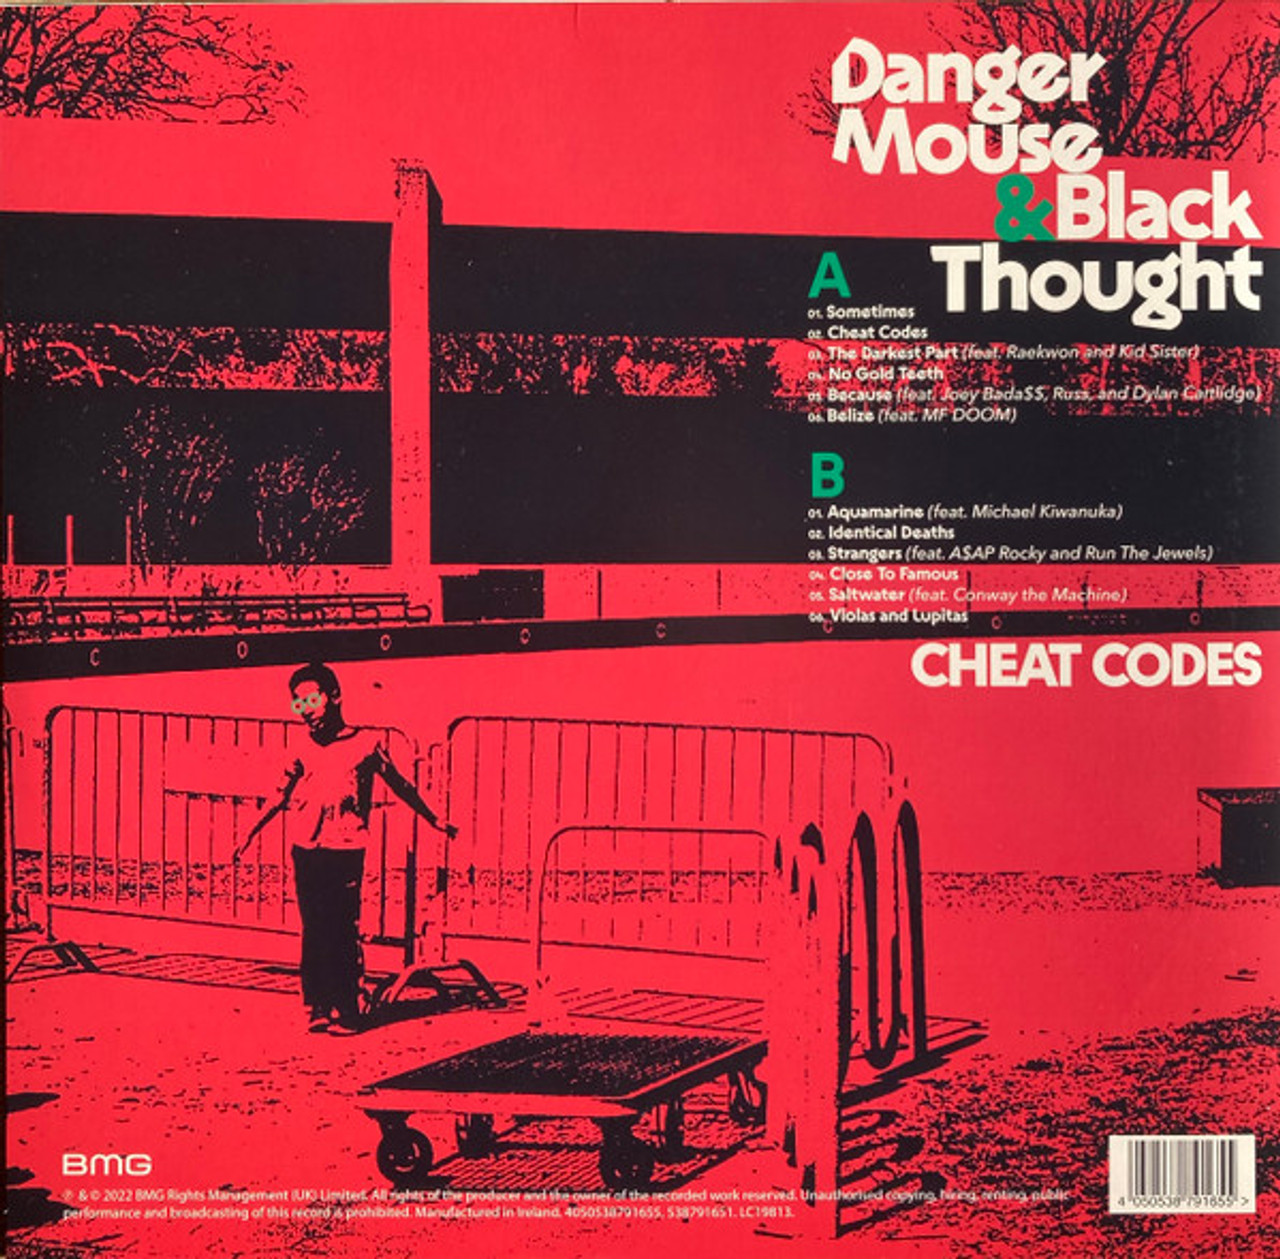 Danger Mouse / Black Thought : Cheat Codes Album Review